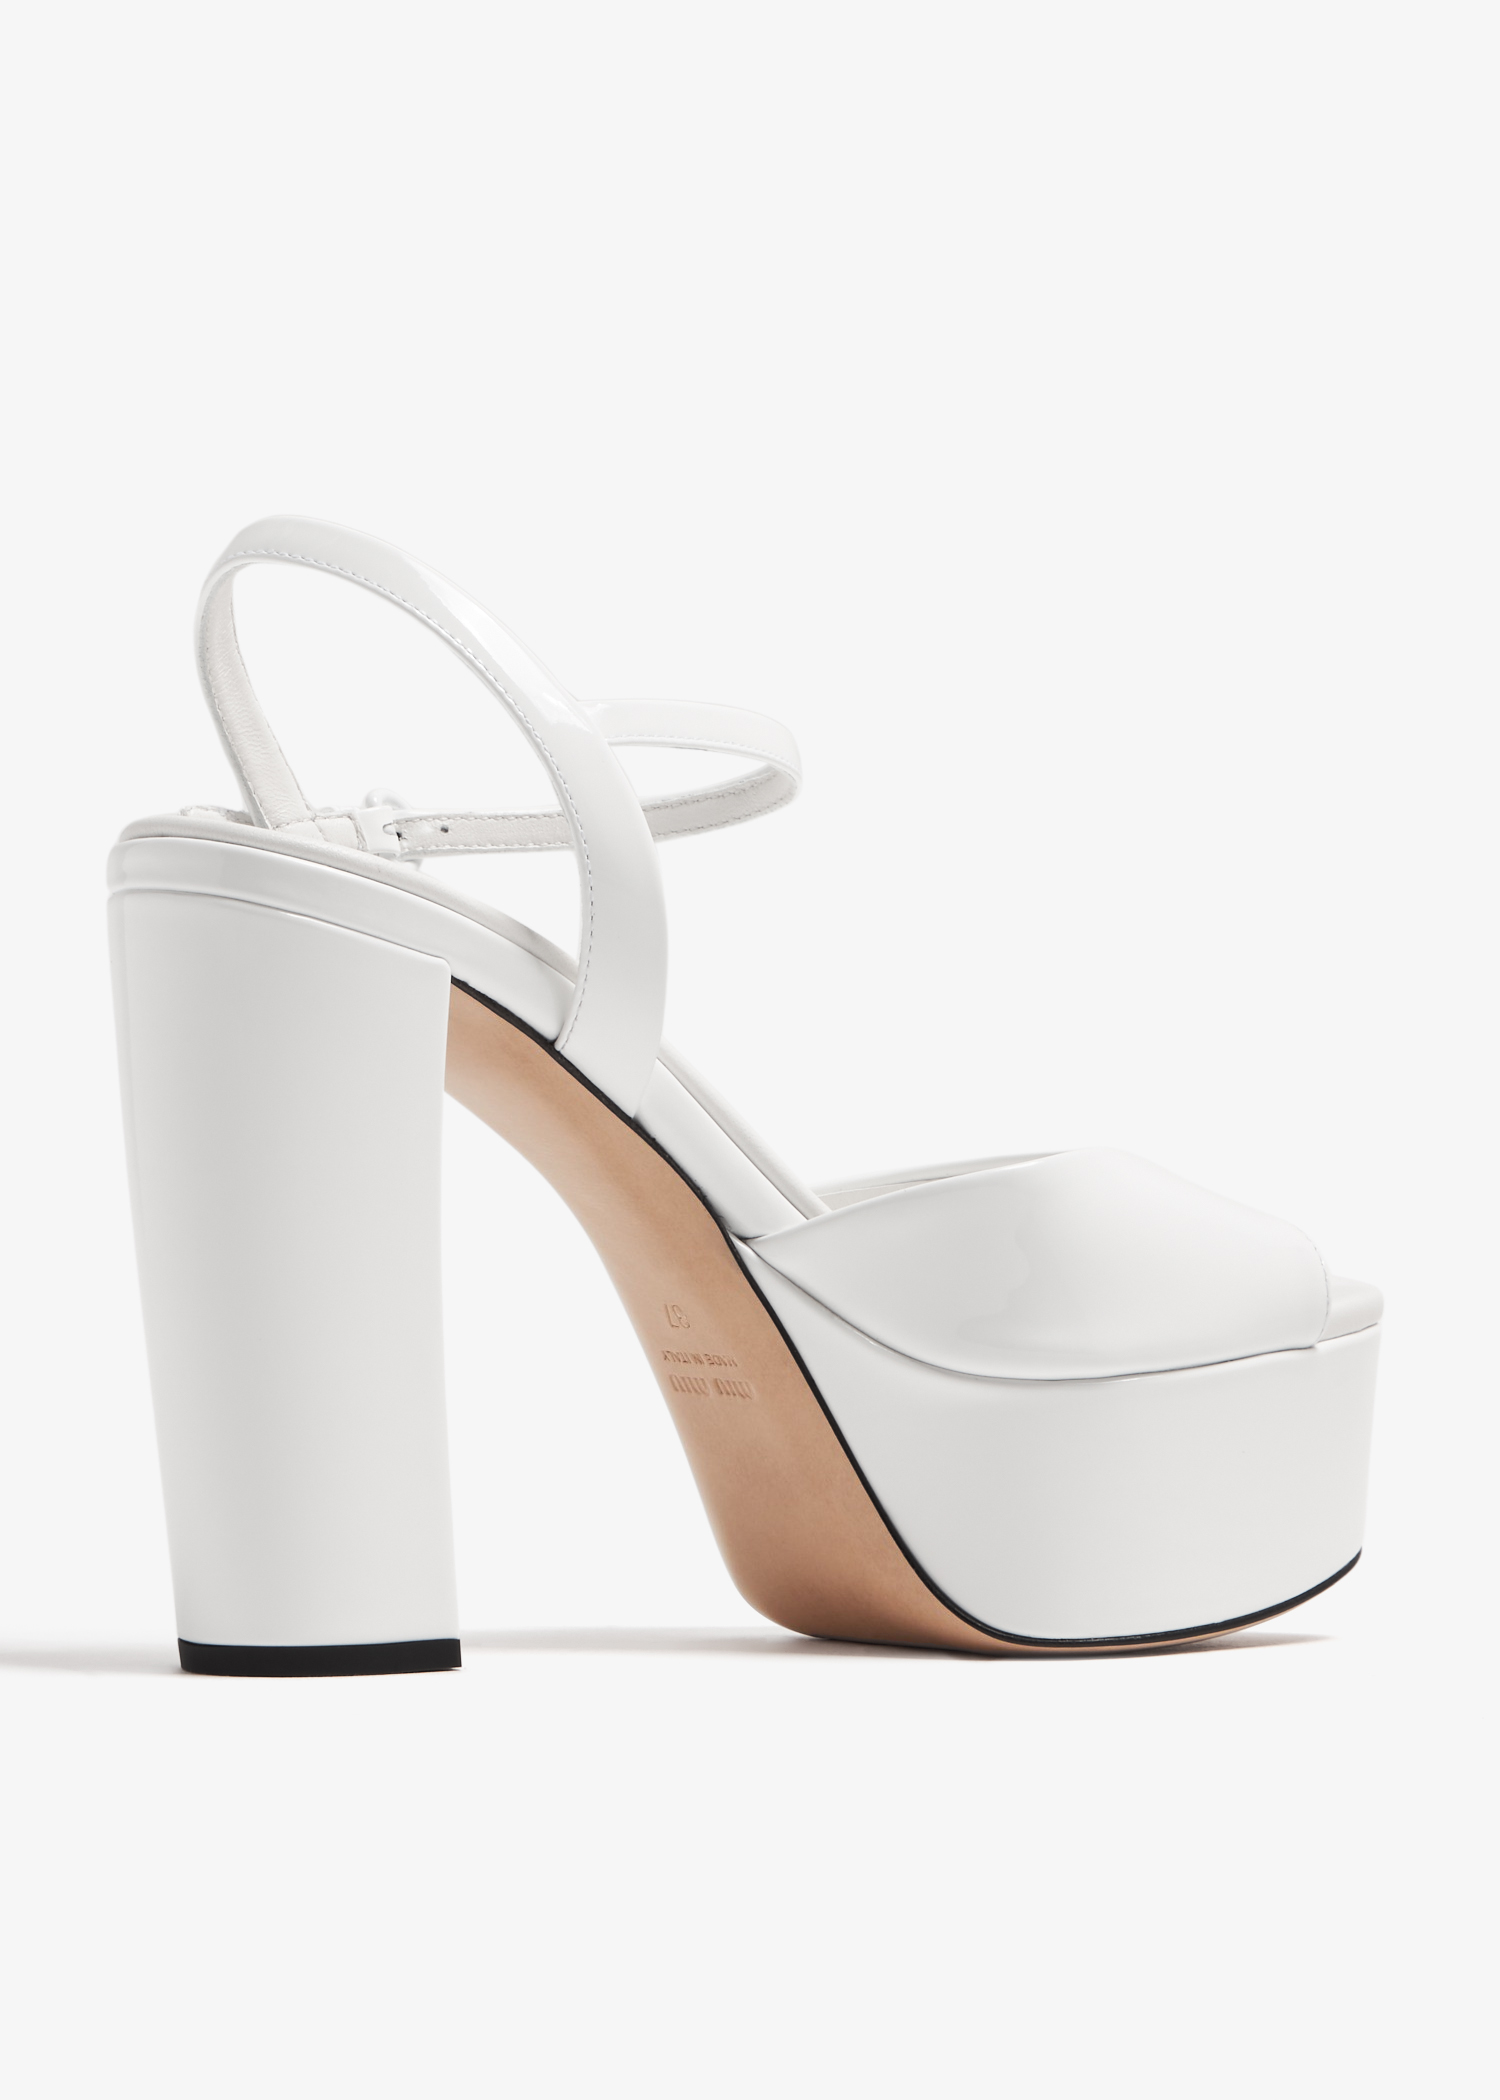 Miu Miu Patent leather platform sandals for Women - White in UAE 